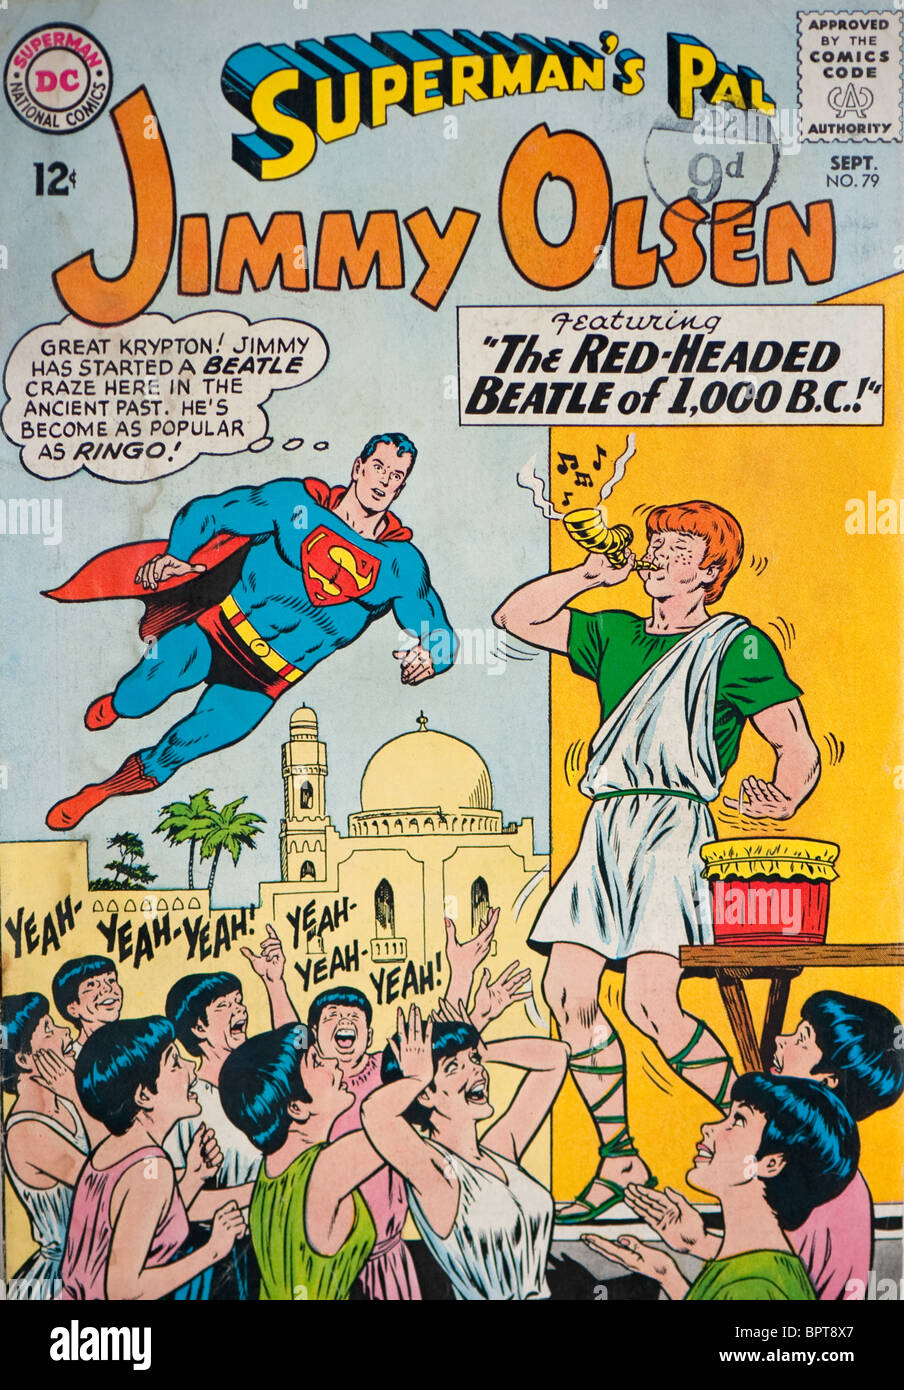 Cover of DC Comic Superman's Pal Jimmy Olsen. Stock Photo